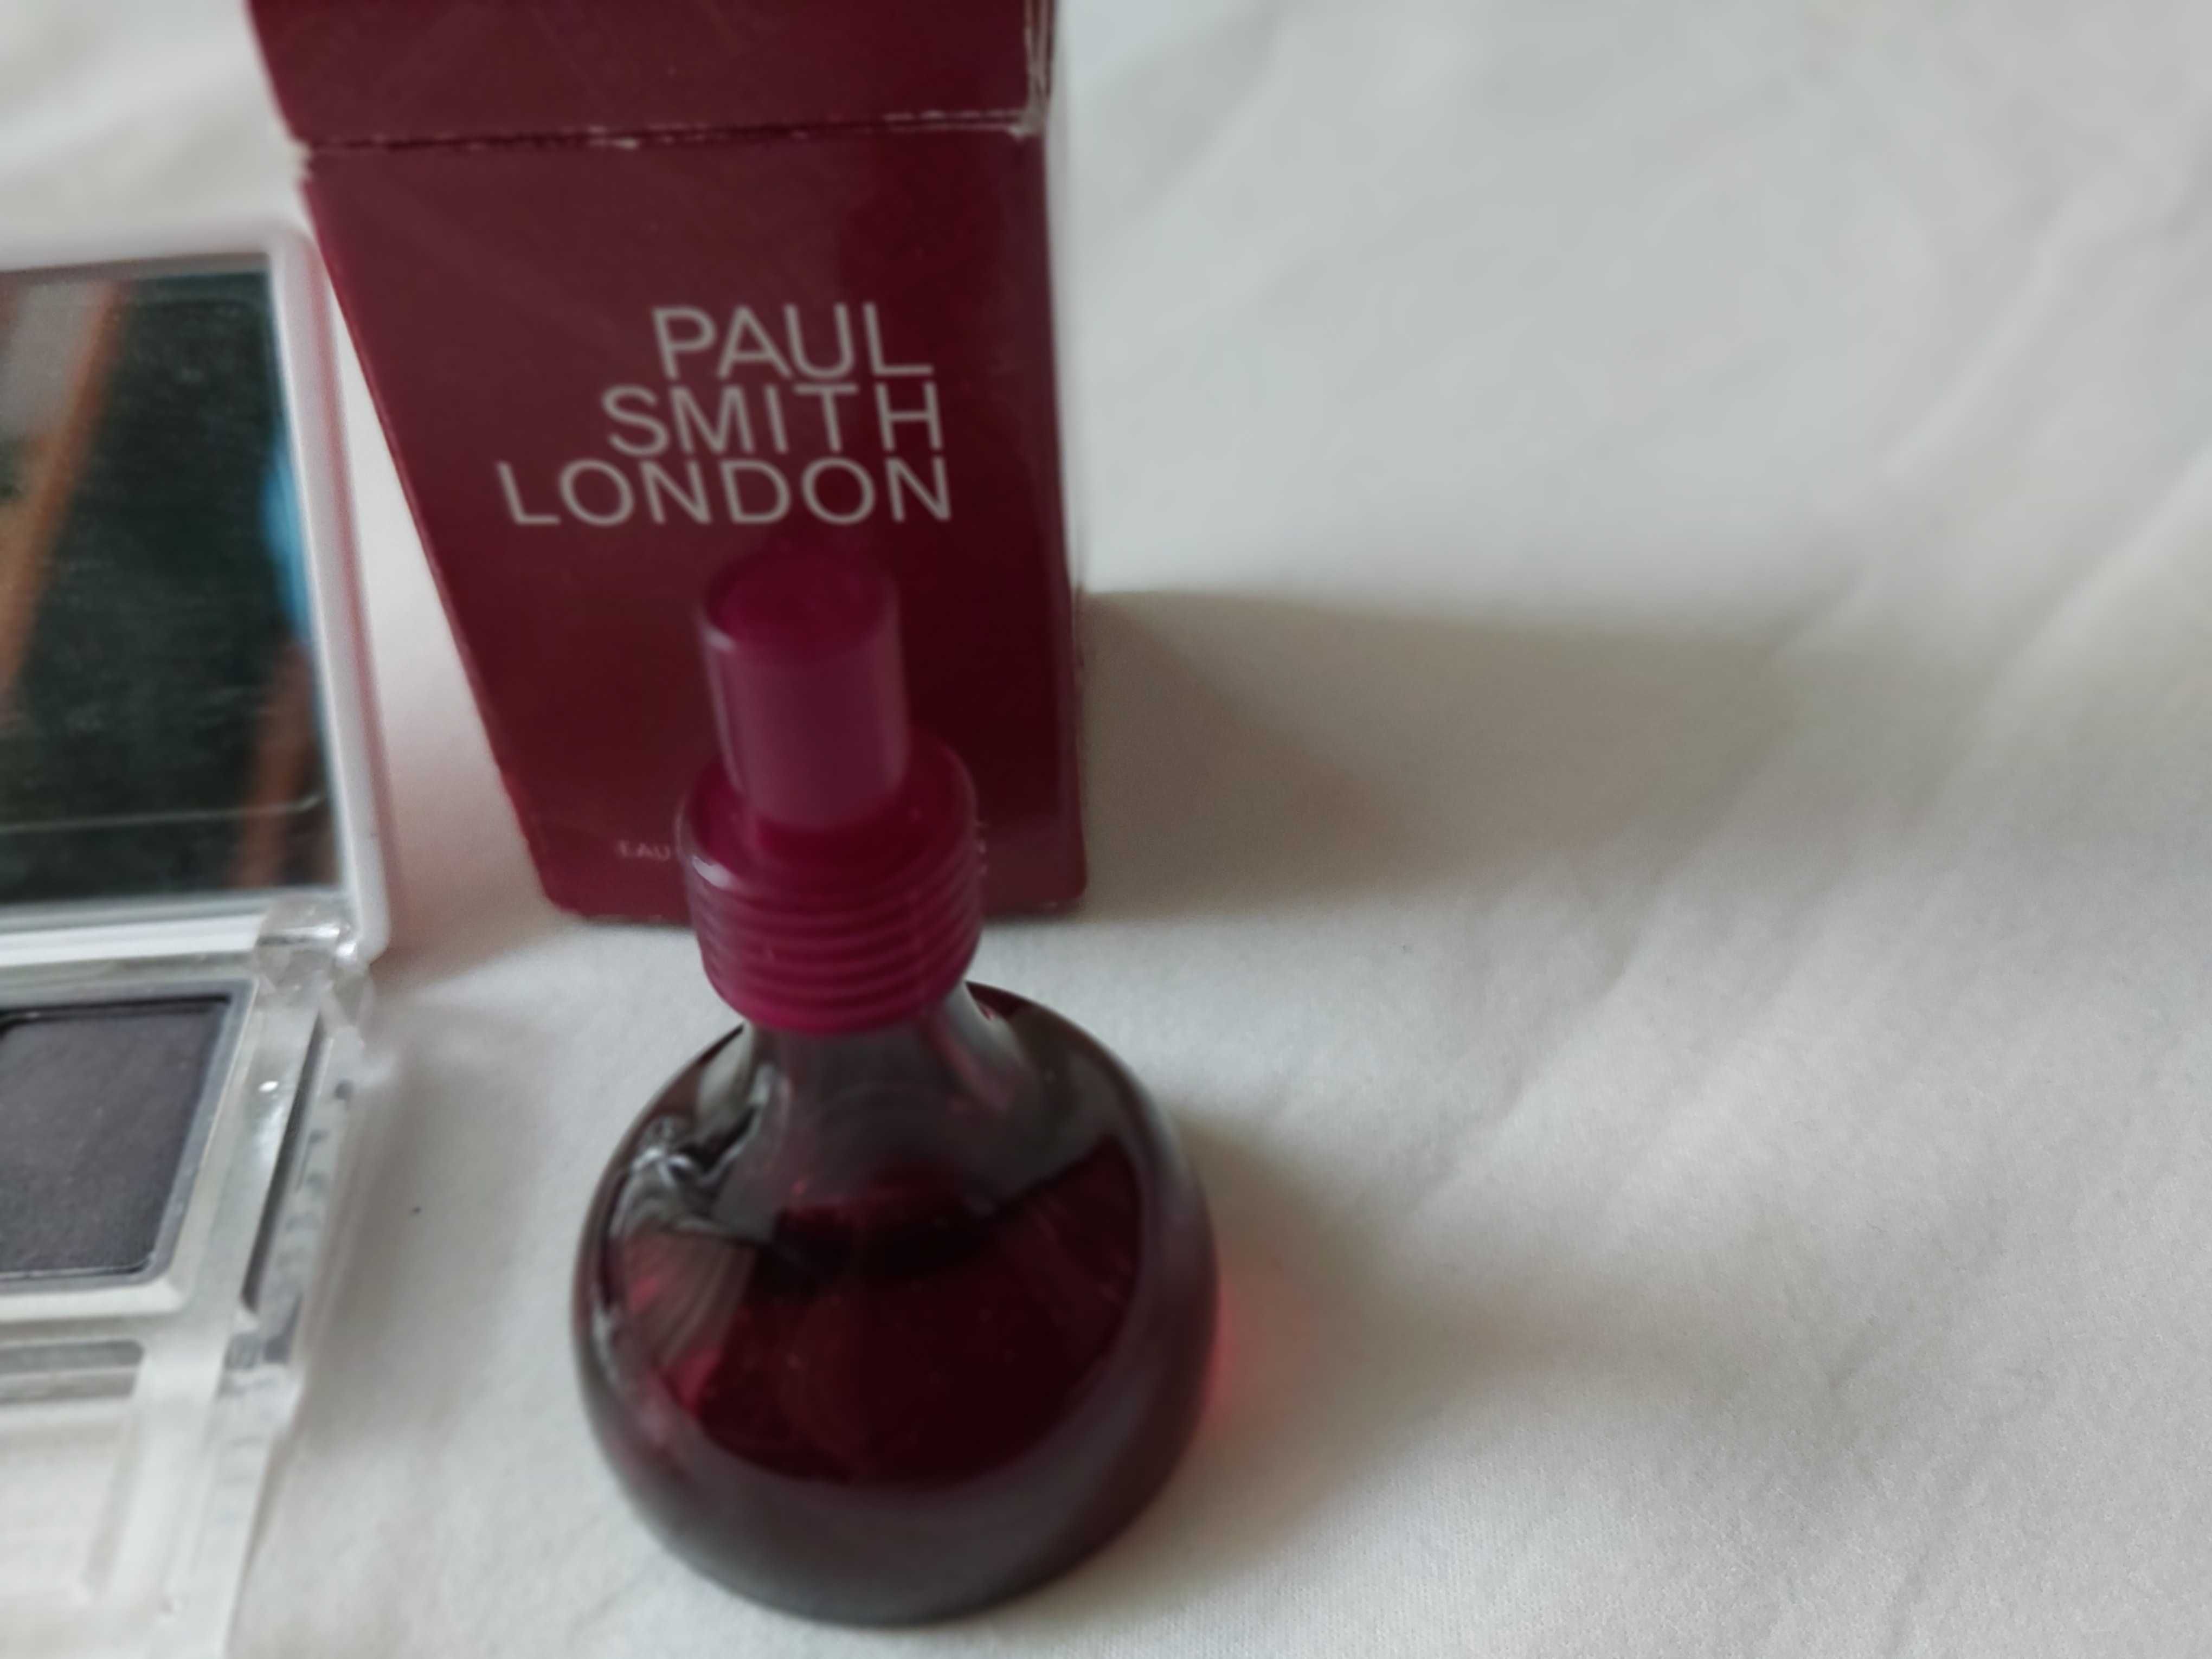 Perfumy Paul Smith London 5 ml i Clinique cienie